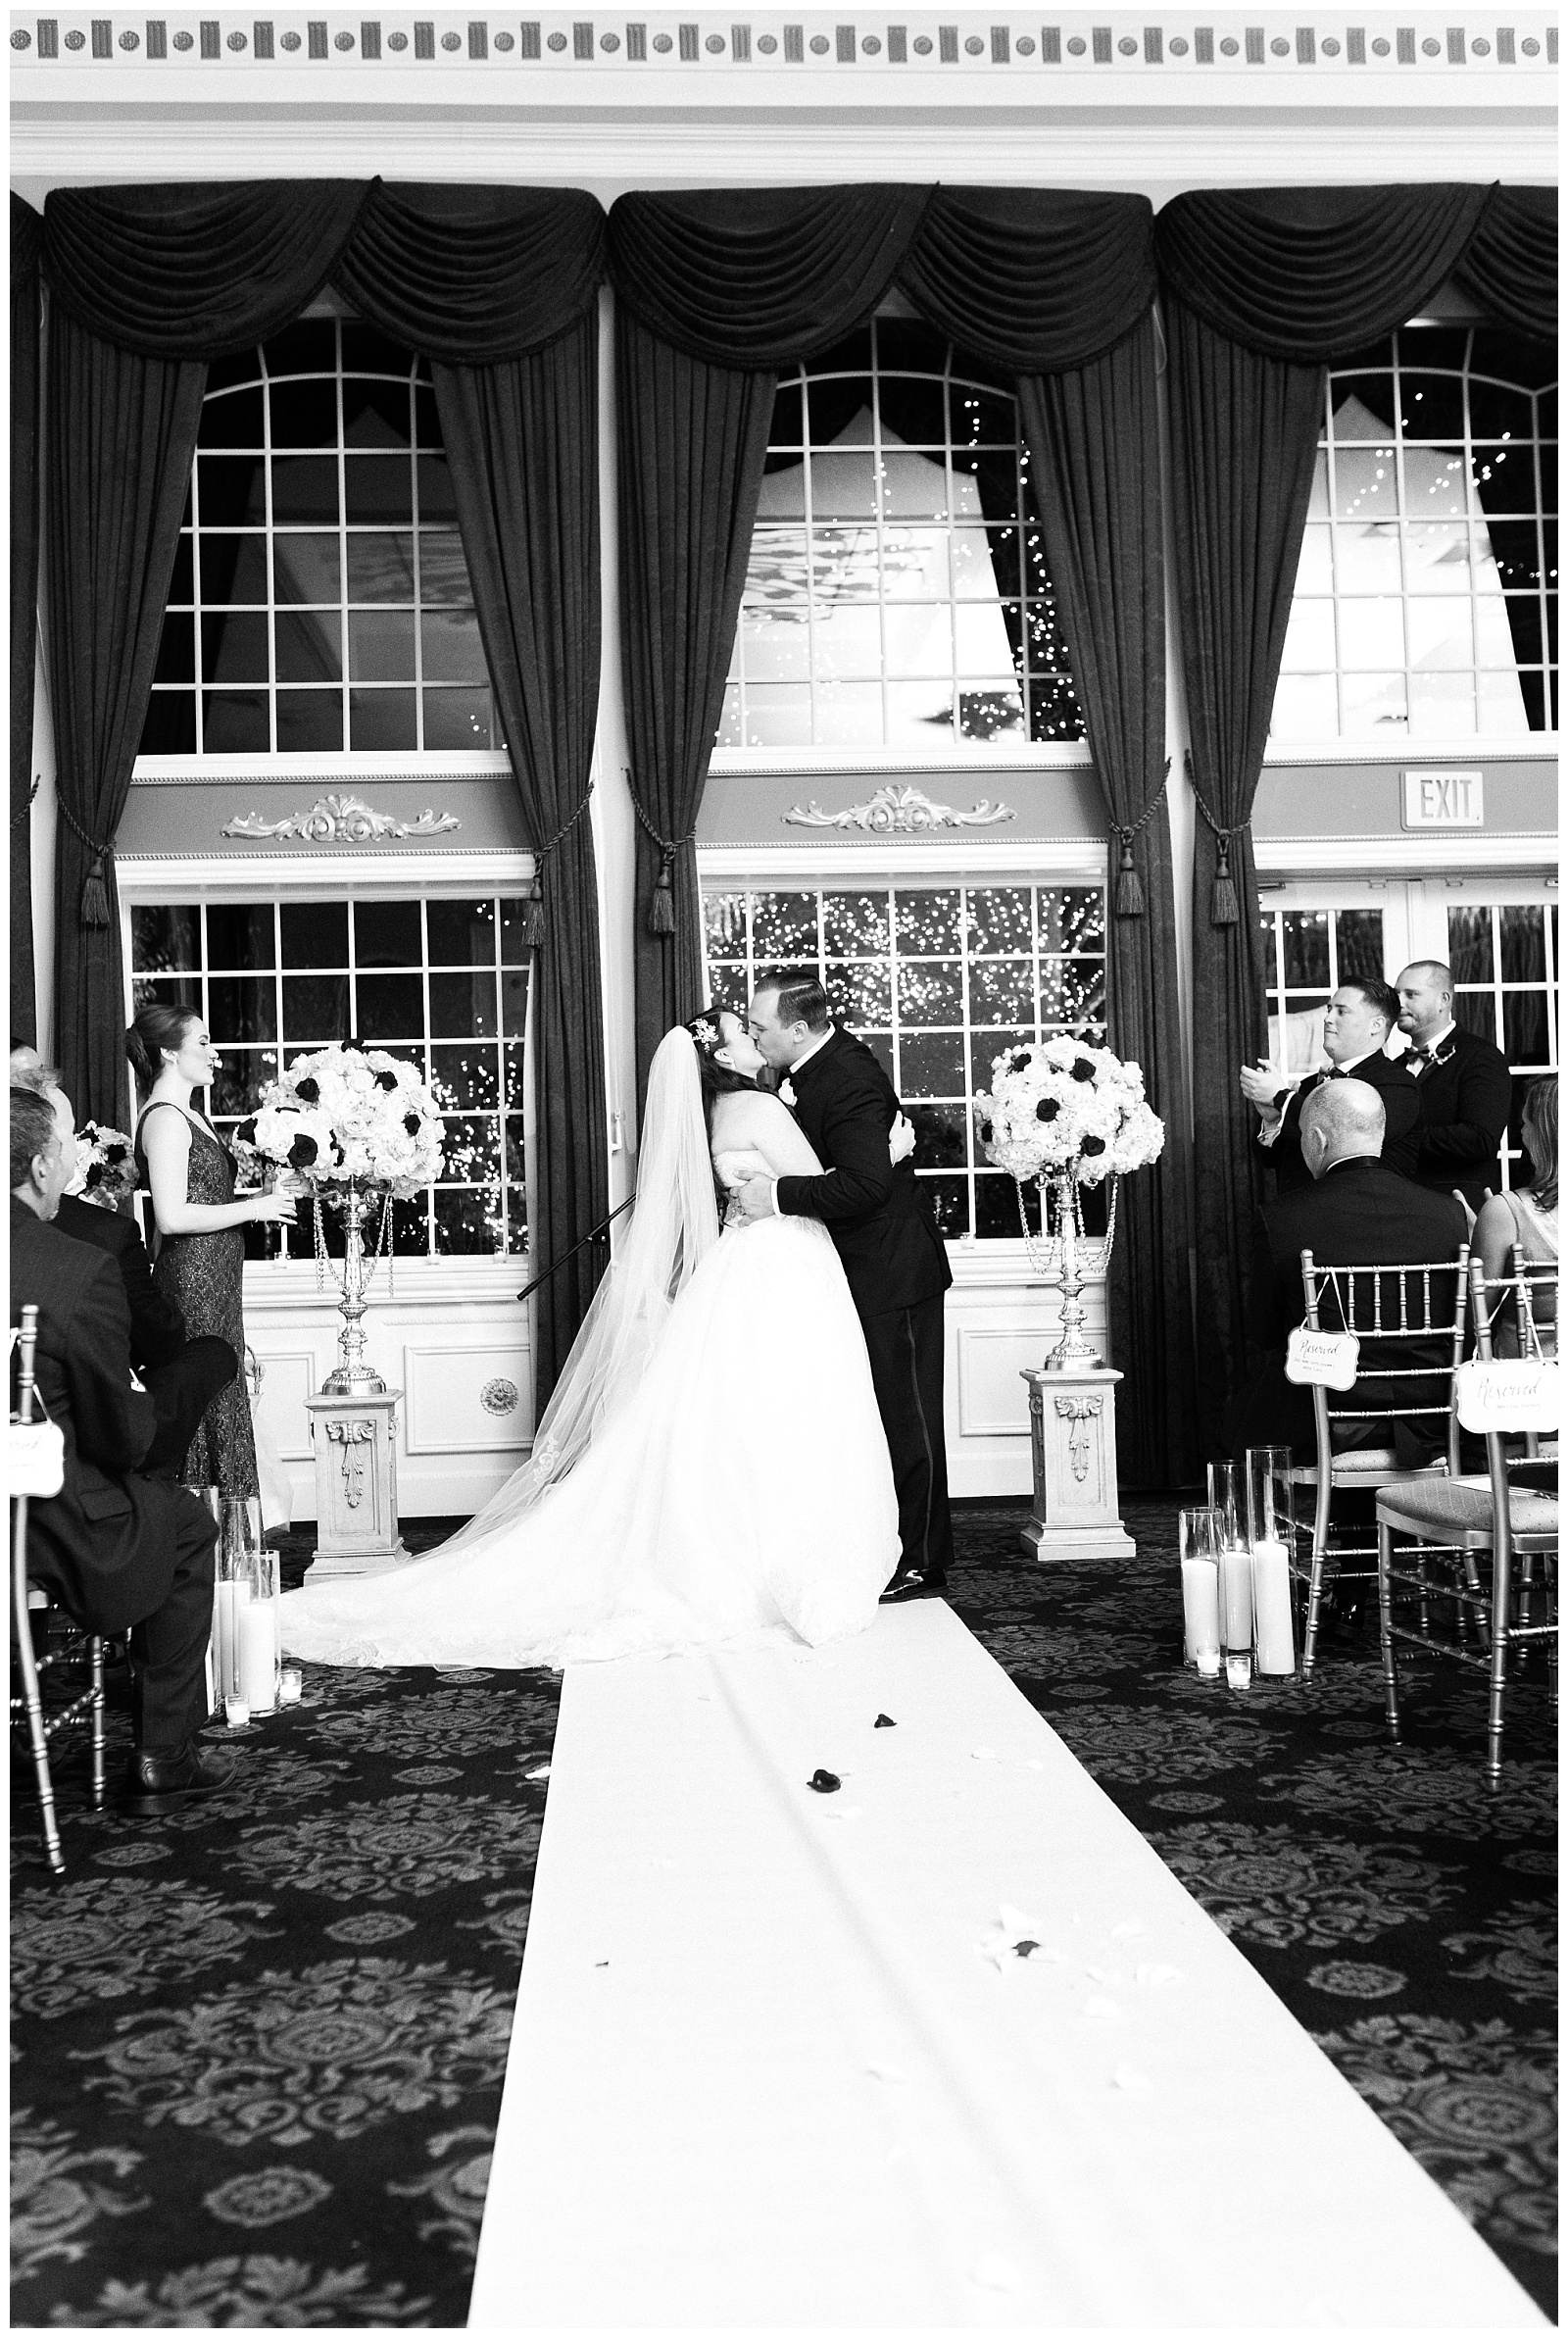 Beauty and the Beast Wedding,Bride,Ceremony,Disney Wedding,Estate at Florentine Gardens,Groom,NJ Wedding,Photographer,Wedding Ceremony,Wedding Photographer,